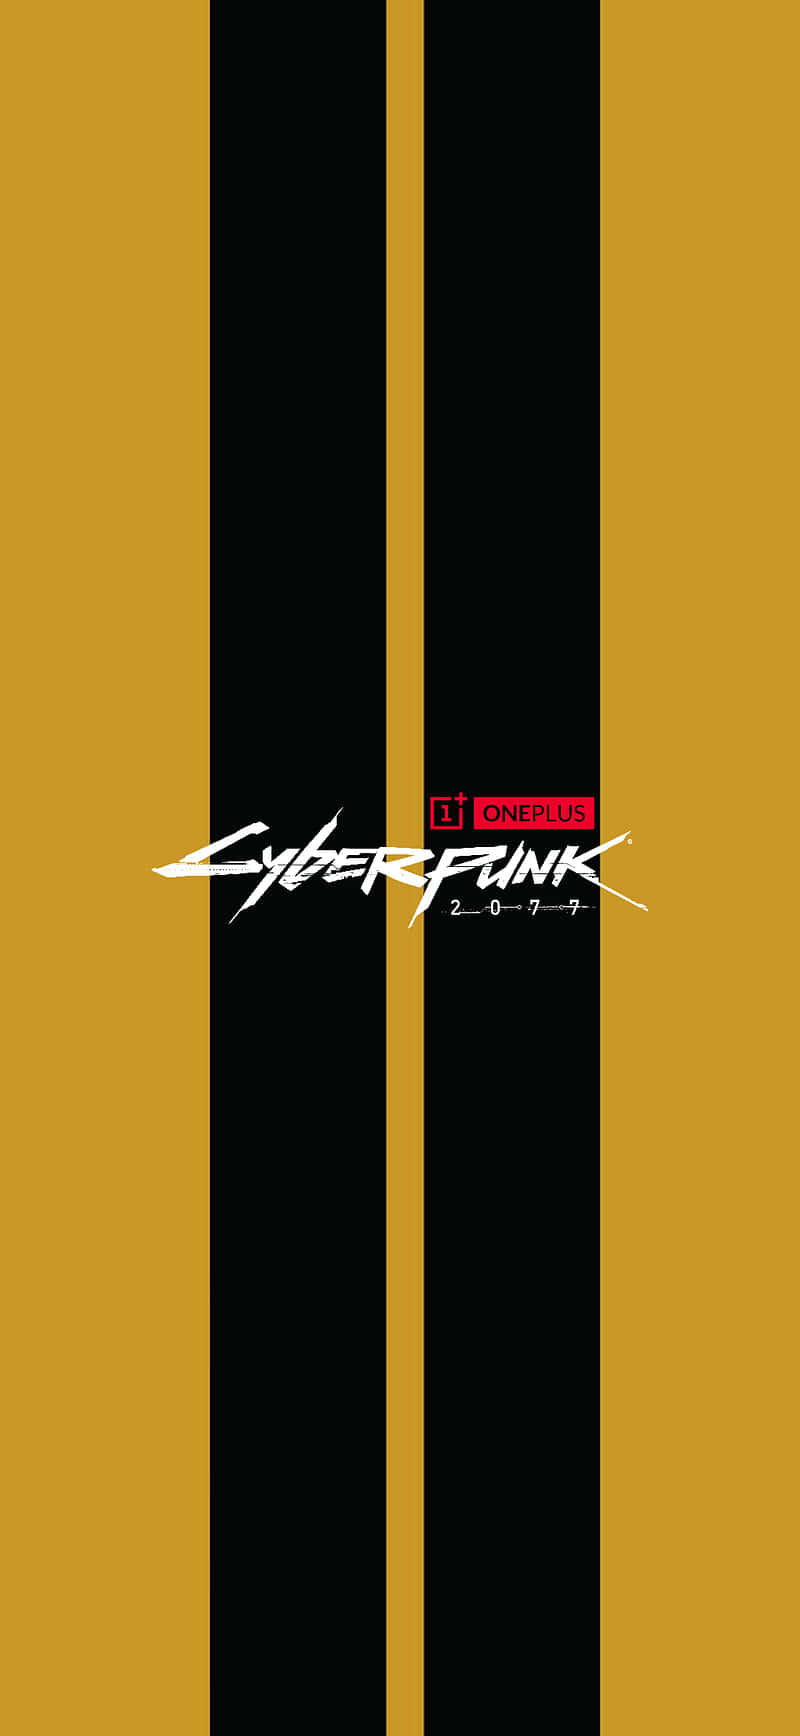 Iphone X Cyberpunk 2077 baggrund gul med sorte striber